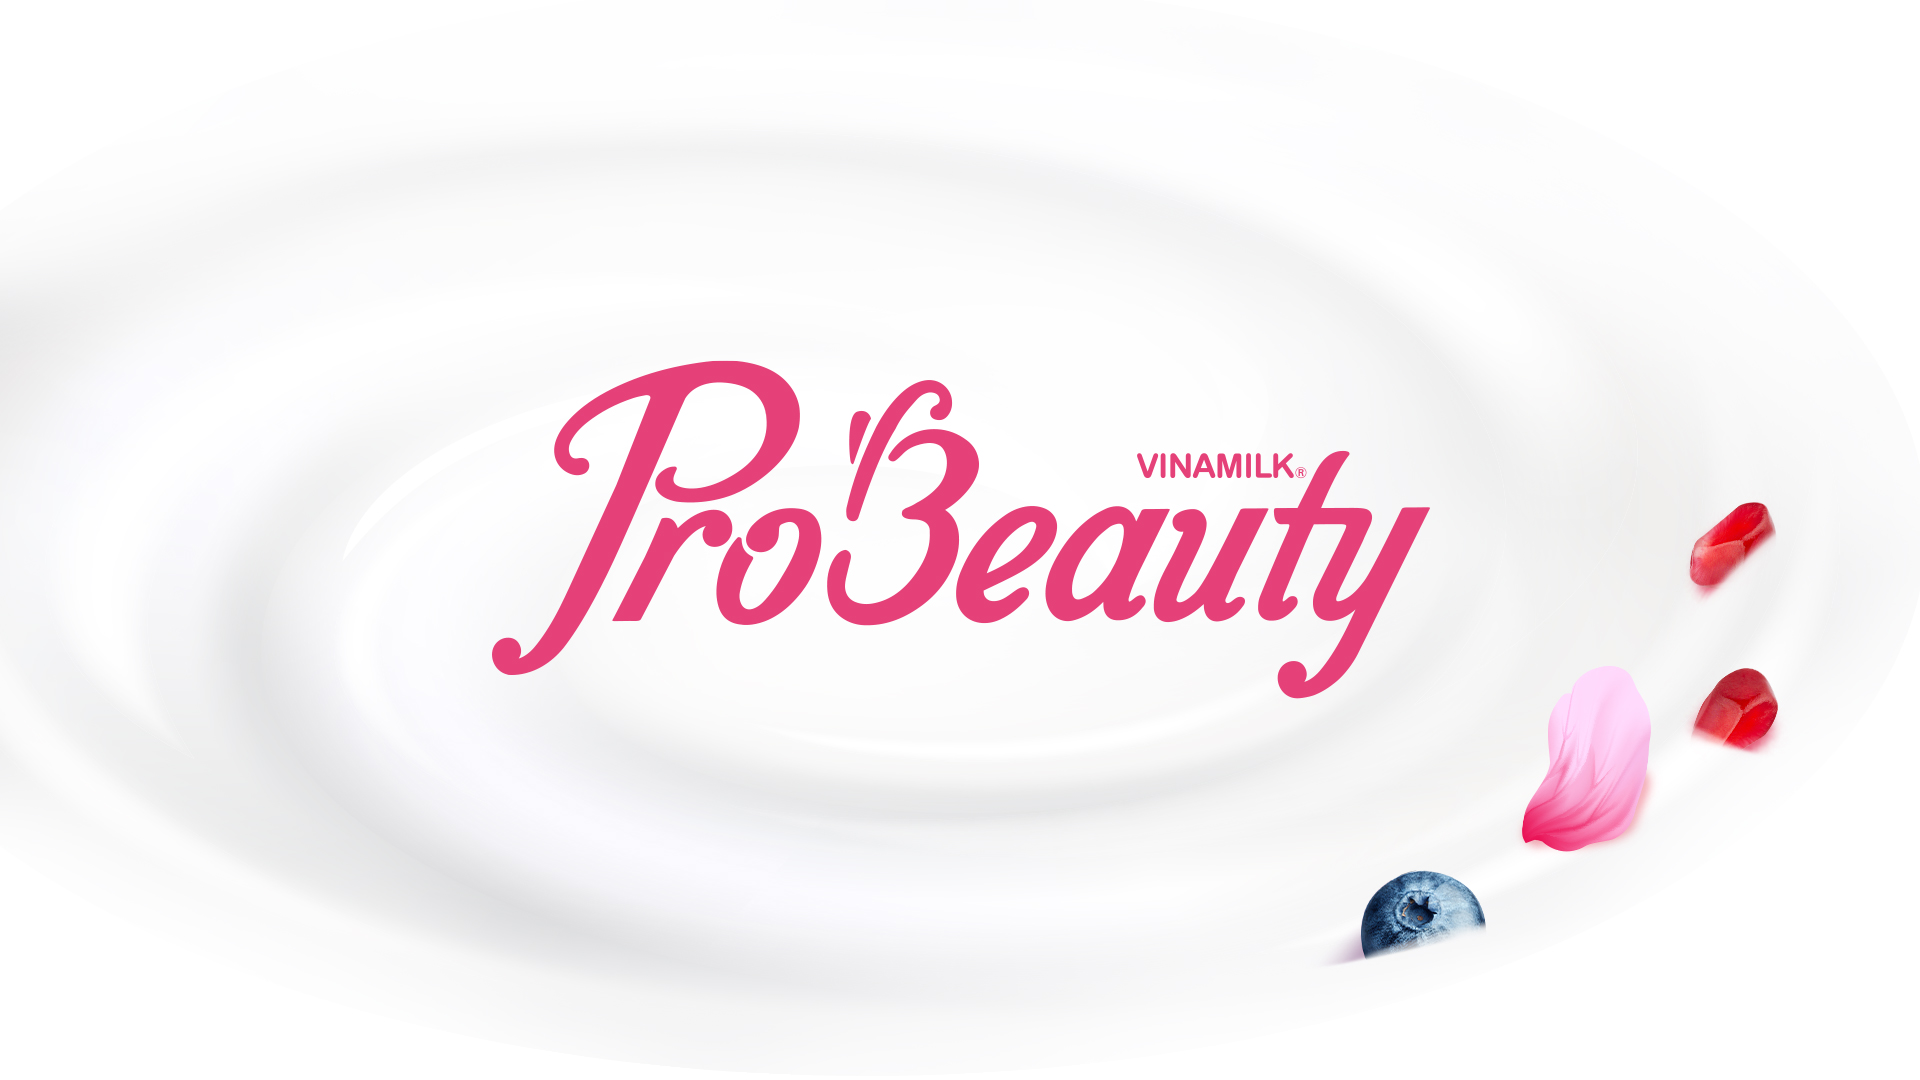 ProBeauty Packaging Rebranding